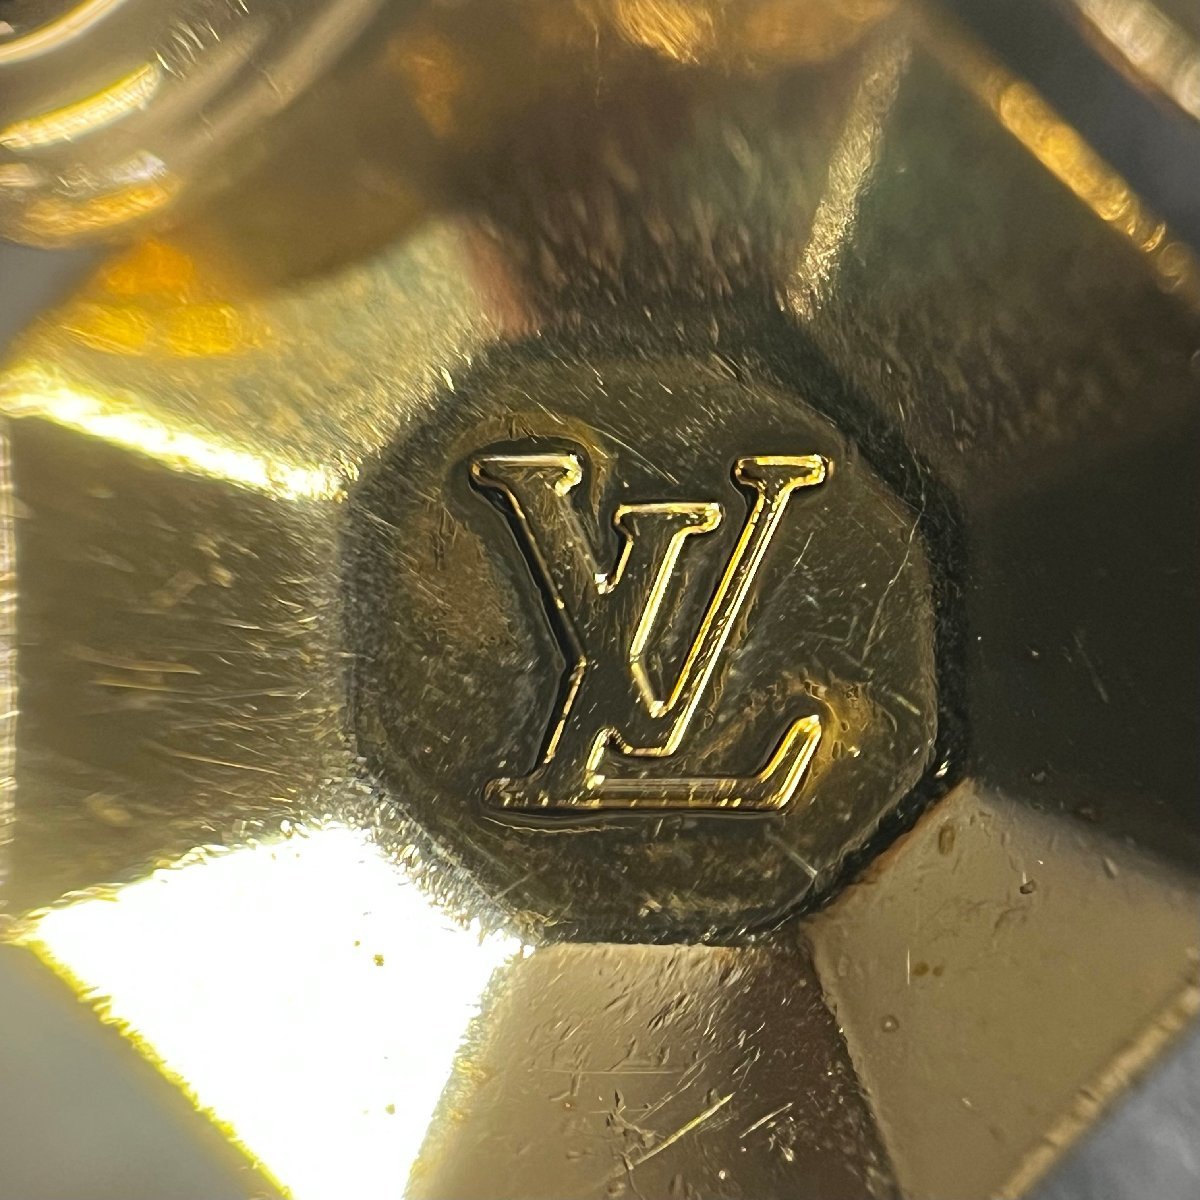 *J222 Louis Vuitton key holder *LVfa set vanity case M65216 Louis * Vuitton key ring (rt)